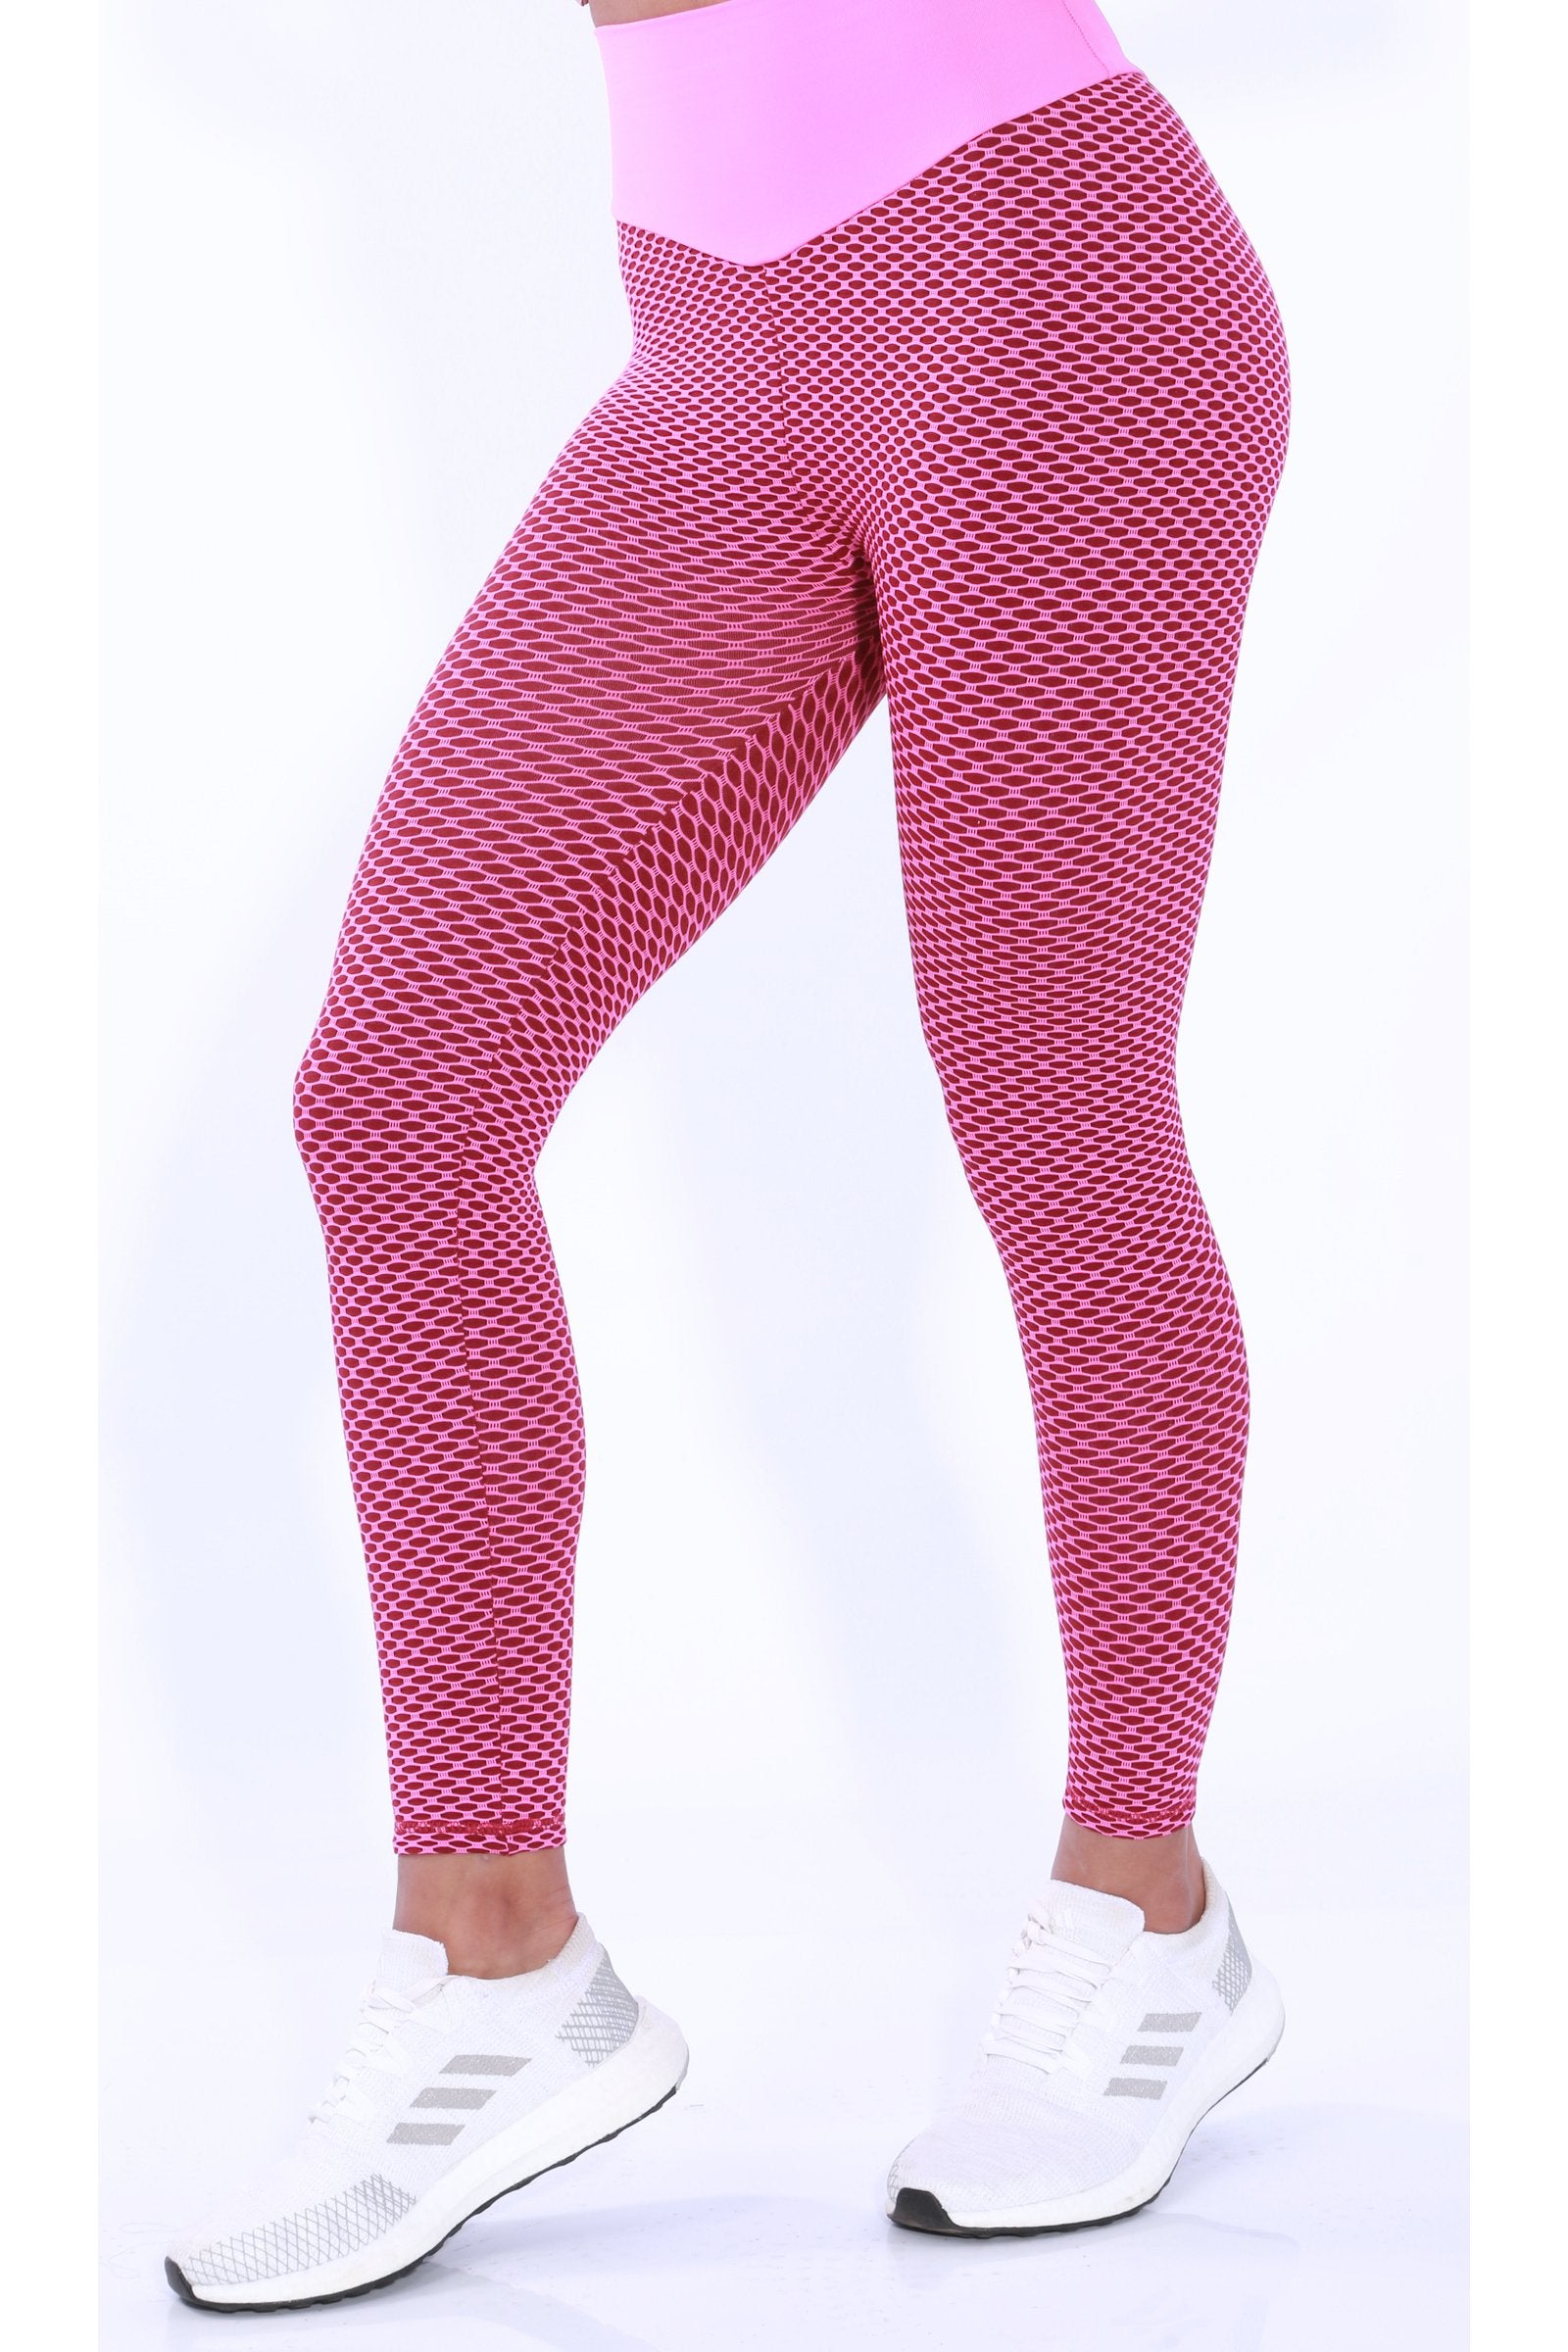 Image of Wonderfit Bubble leggings AKA ‘Tik Tok Pants’ - Anti cellulite leggings - Pink